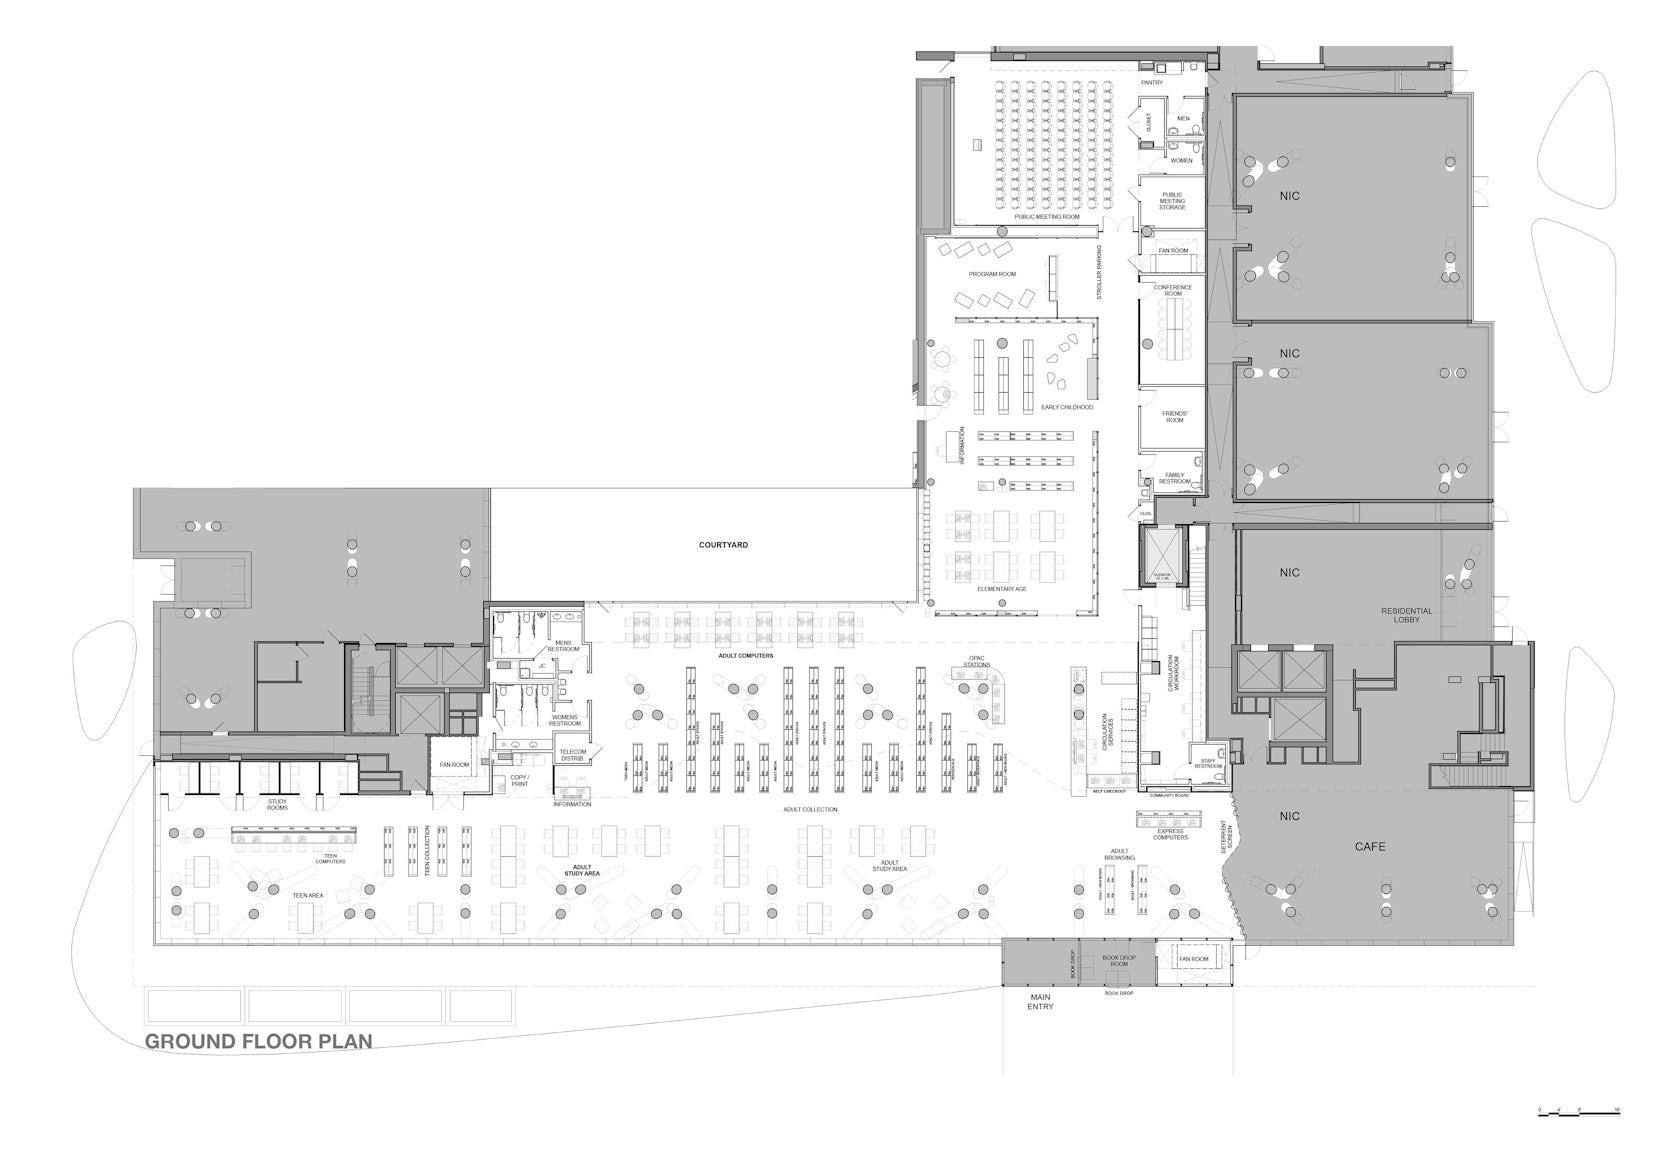 dc-public-library-west-end-branch-by-core-architecture-design